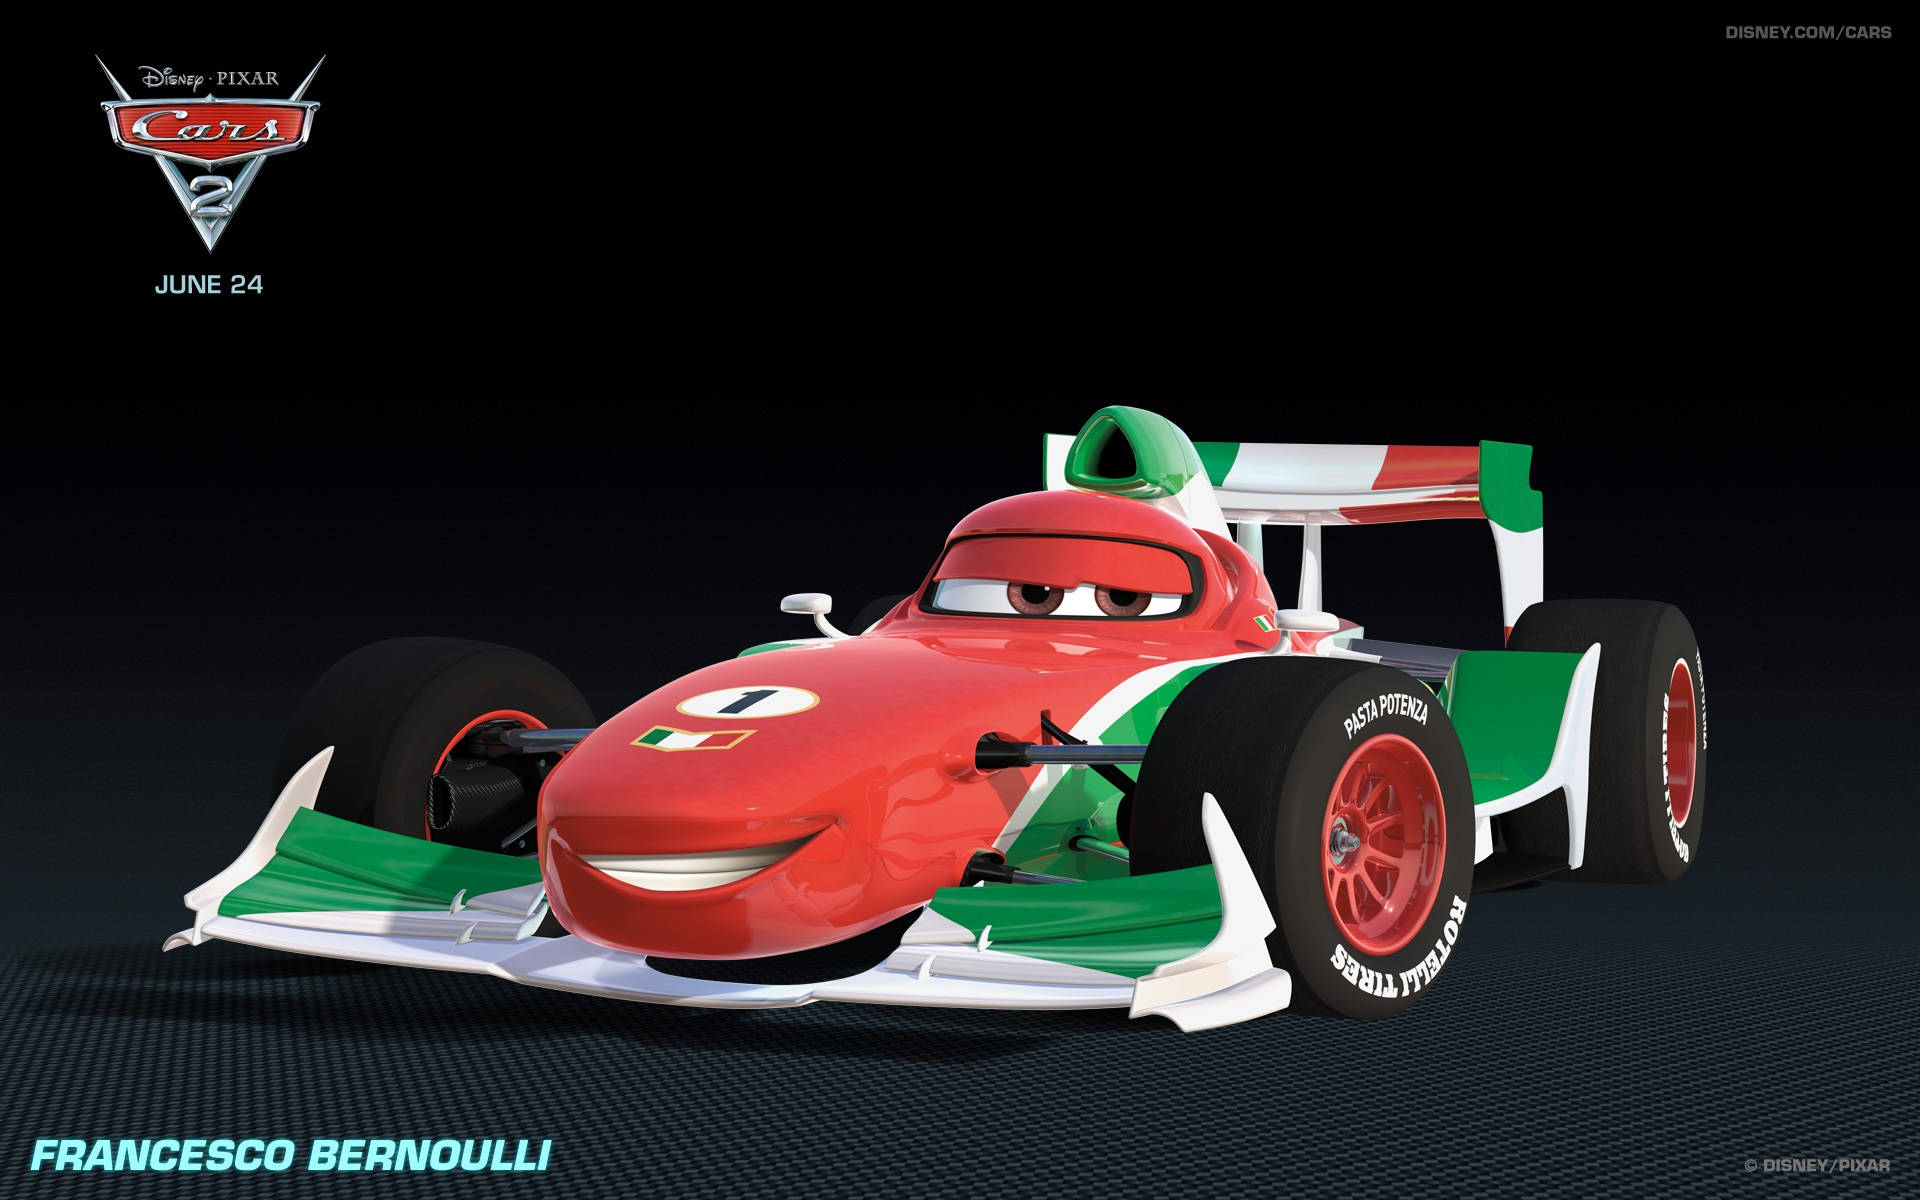 Francesco Bernoulli, The Speedy Race Car From Disney Pixar's Cars 2